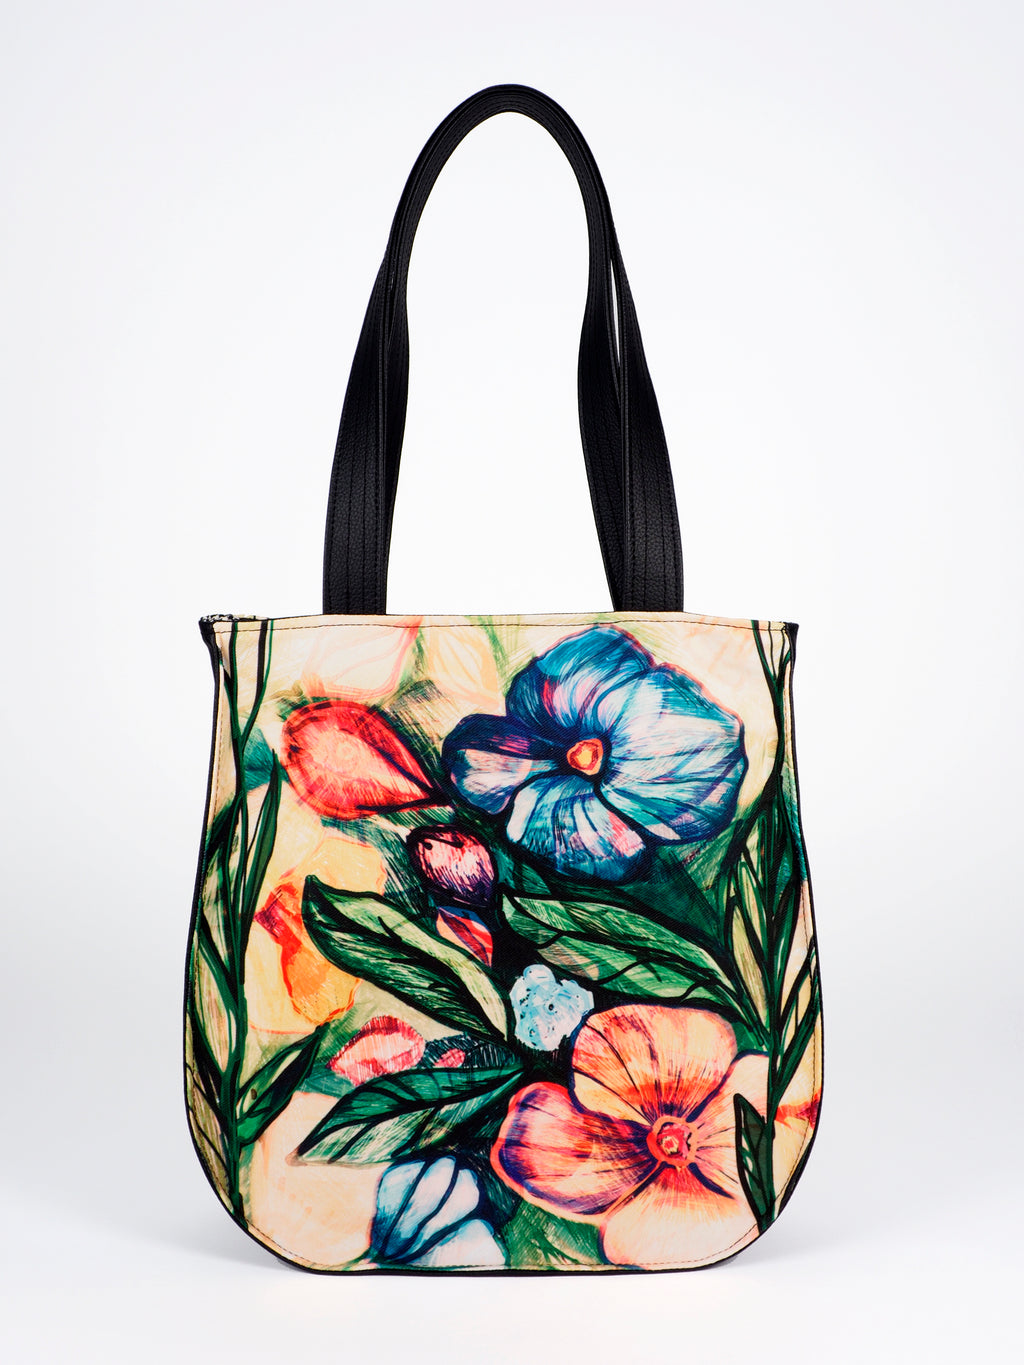 Bardo style bag - Vintage garden - Premium style bag from BARDO ART WORKS - Just lvbeige, green, leaves, pink, red, Rosily, summer69.00! Shop now at BARDO ART WORKS